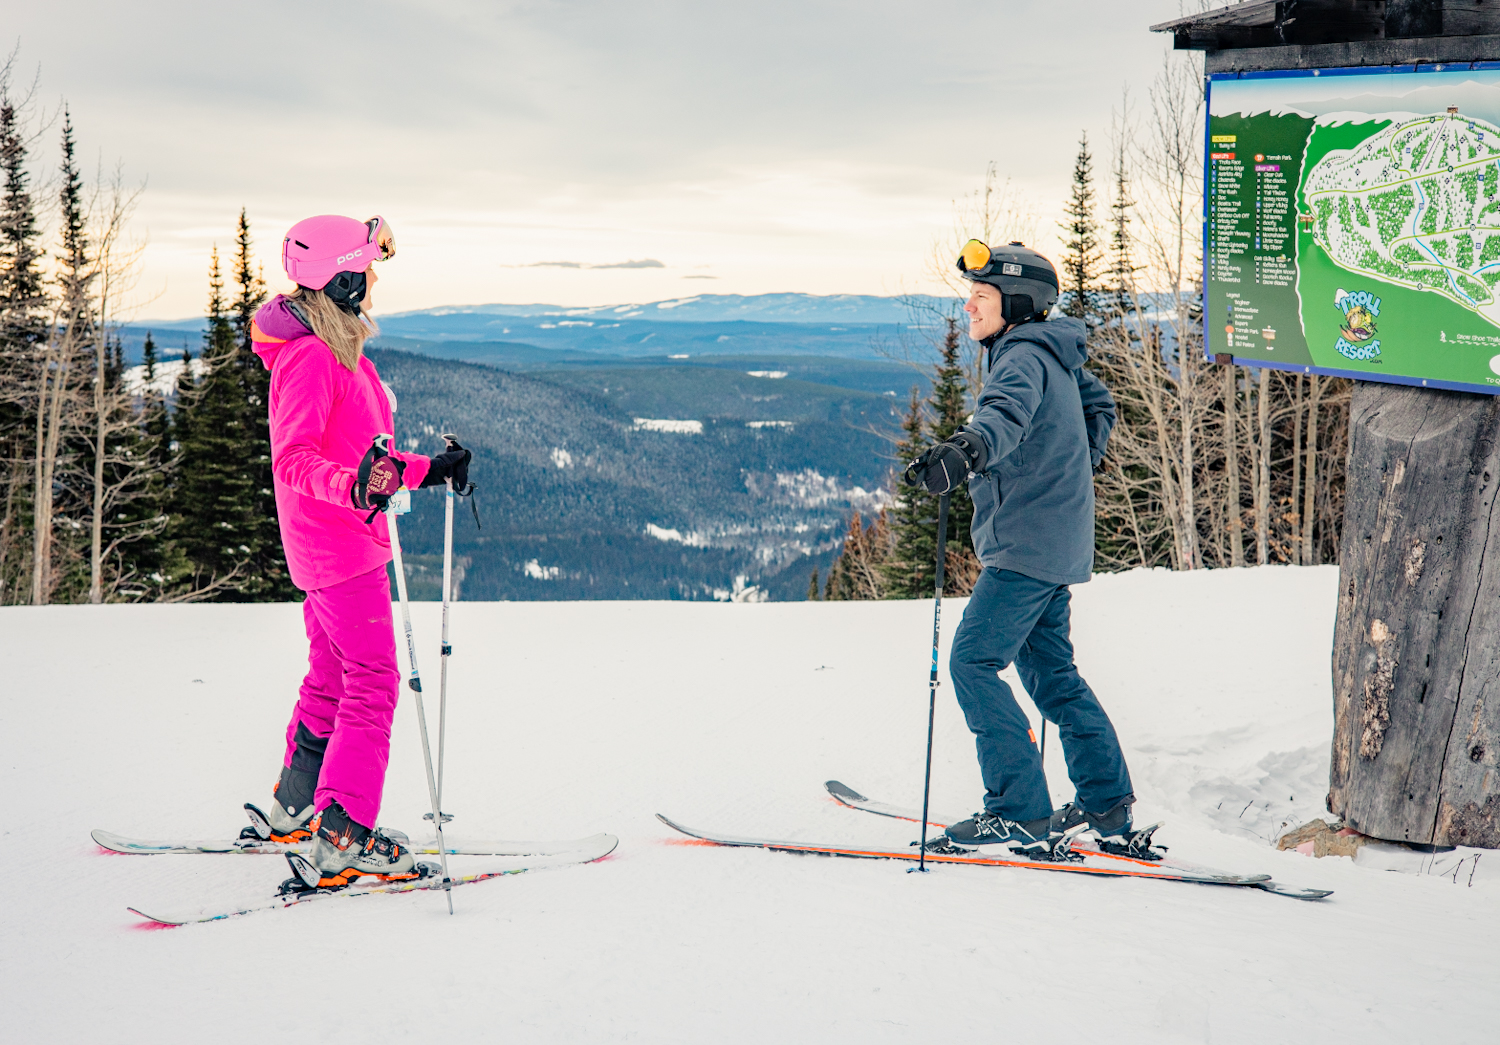 It's a skill for sure!🥶🥶 #ski #skitok #skiing #winter #valthorens #f